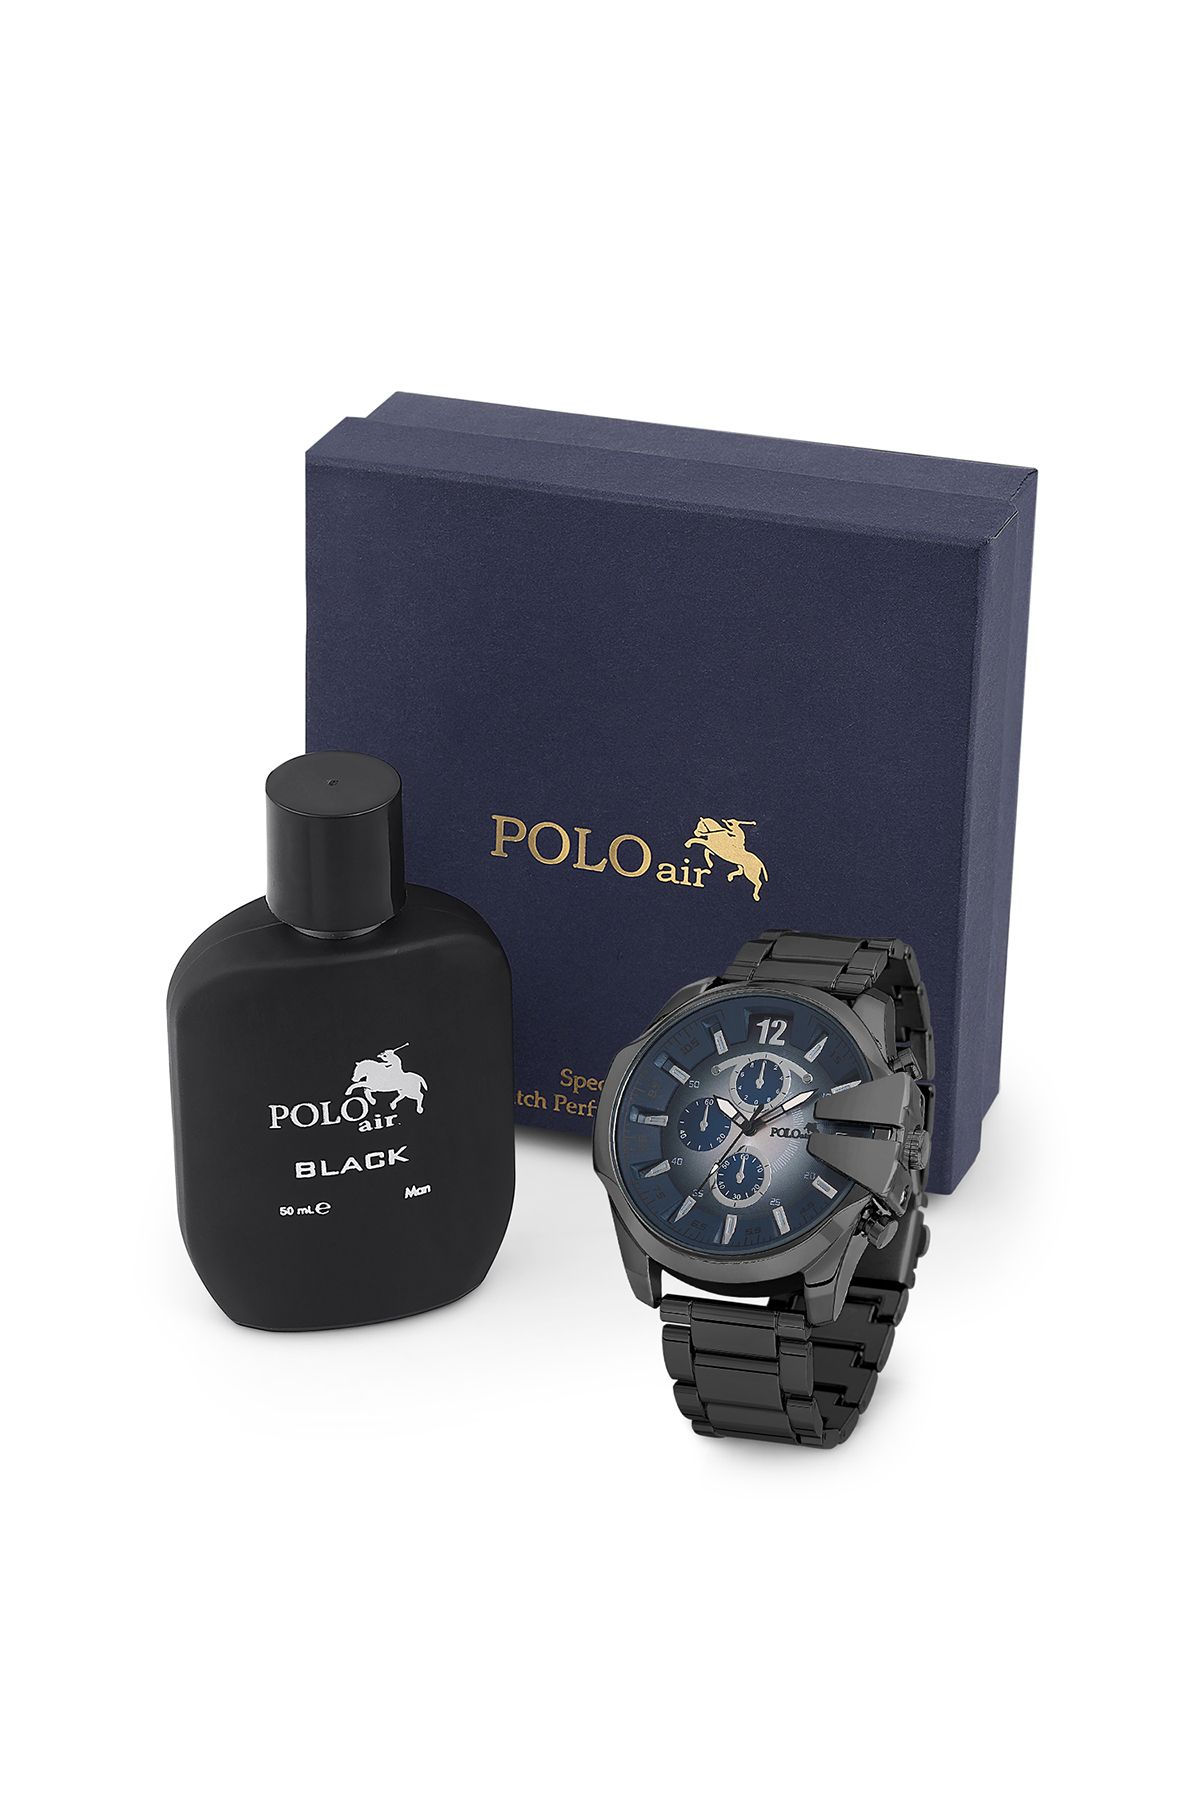 polo air Erkek Kol Saati Ve Parfüm Seti Hediyelik Kutusunda Kombin Siyah-Lacivert Renk